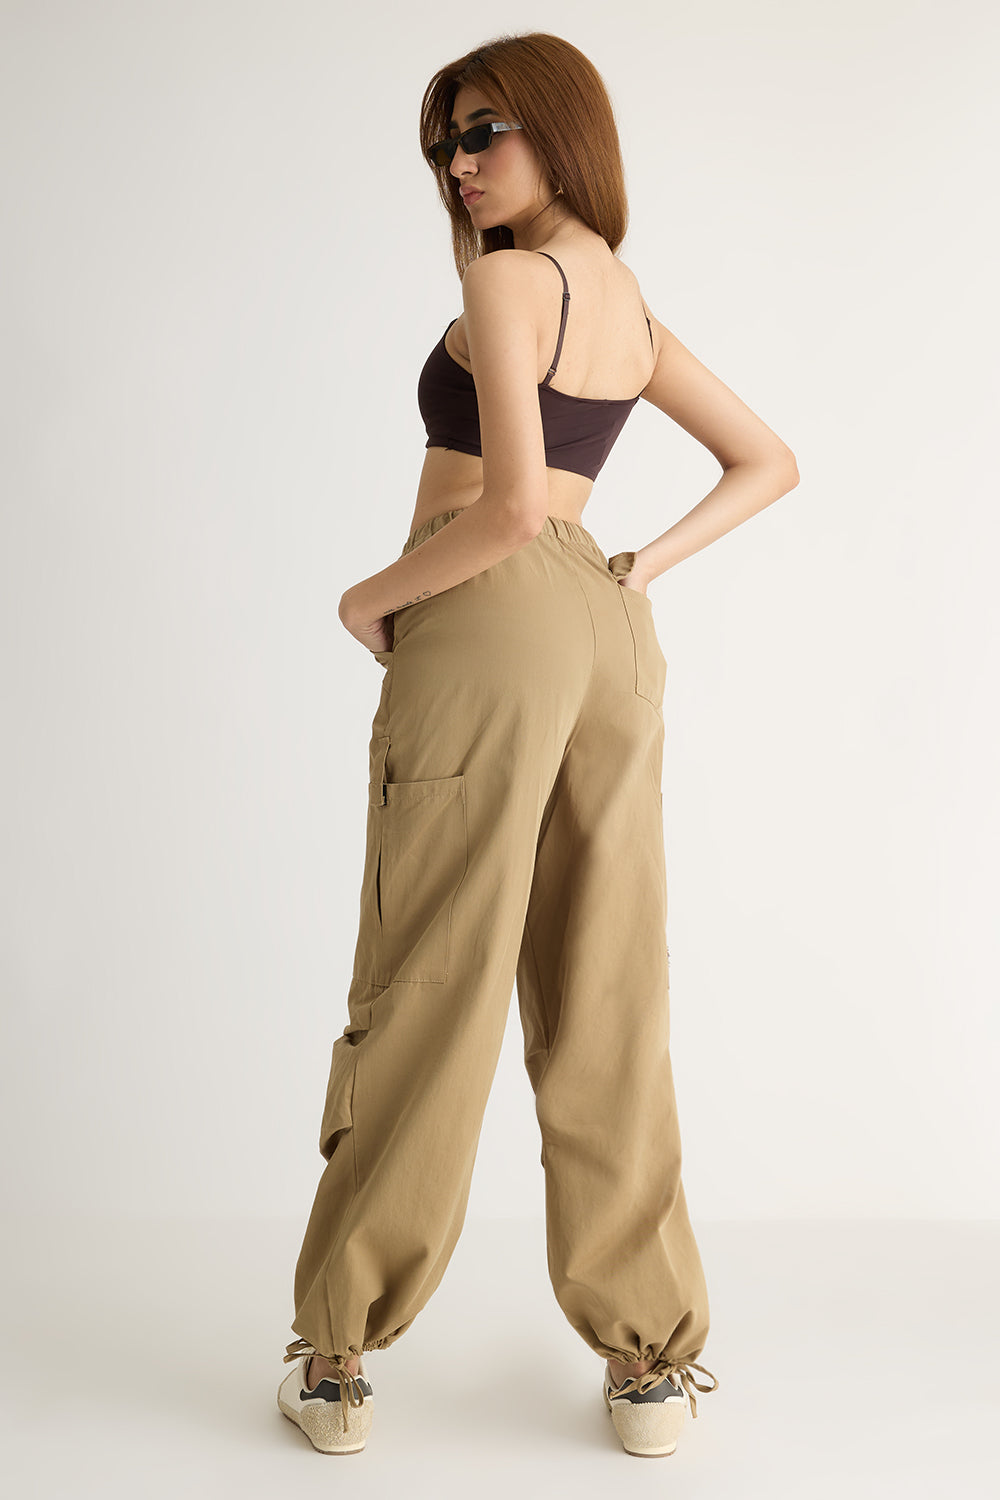 Shop for Cargo Pants for Women Online Starting @ ₹999